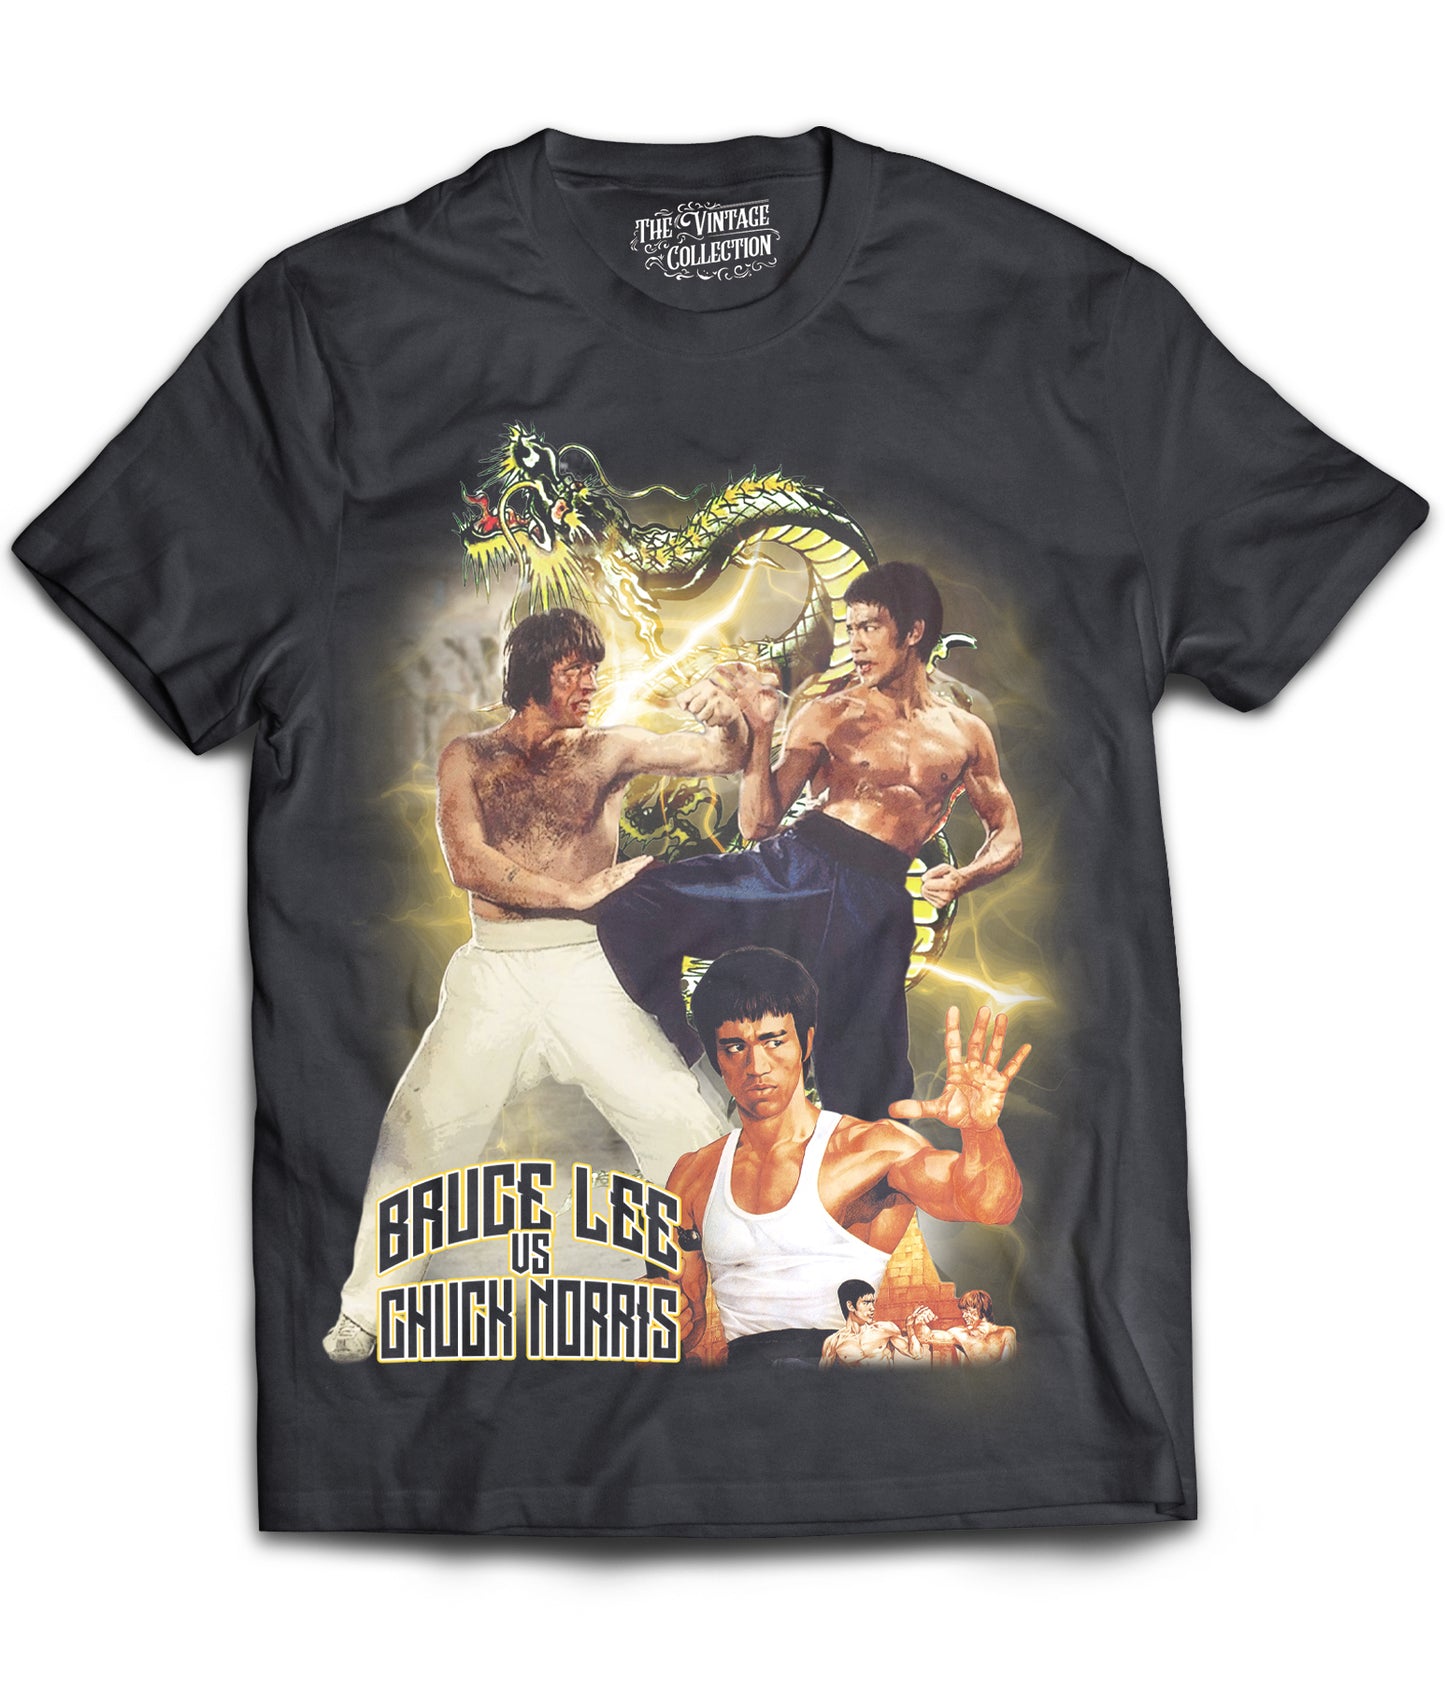 Bruce Lee vs Chuck Norris Tribute Shirt (Black)